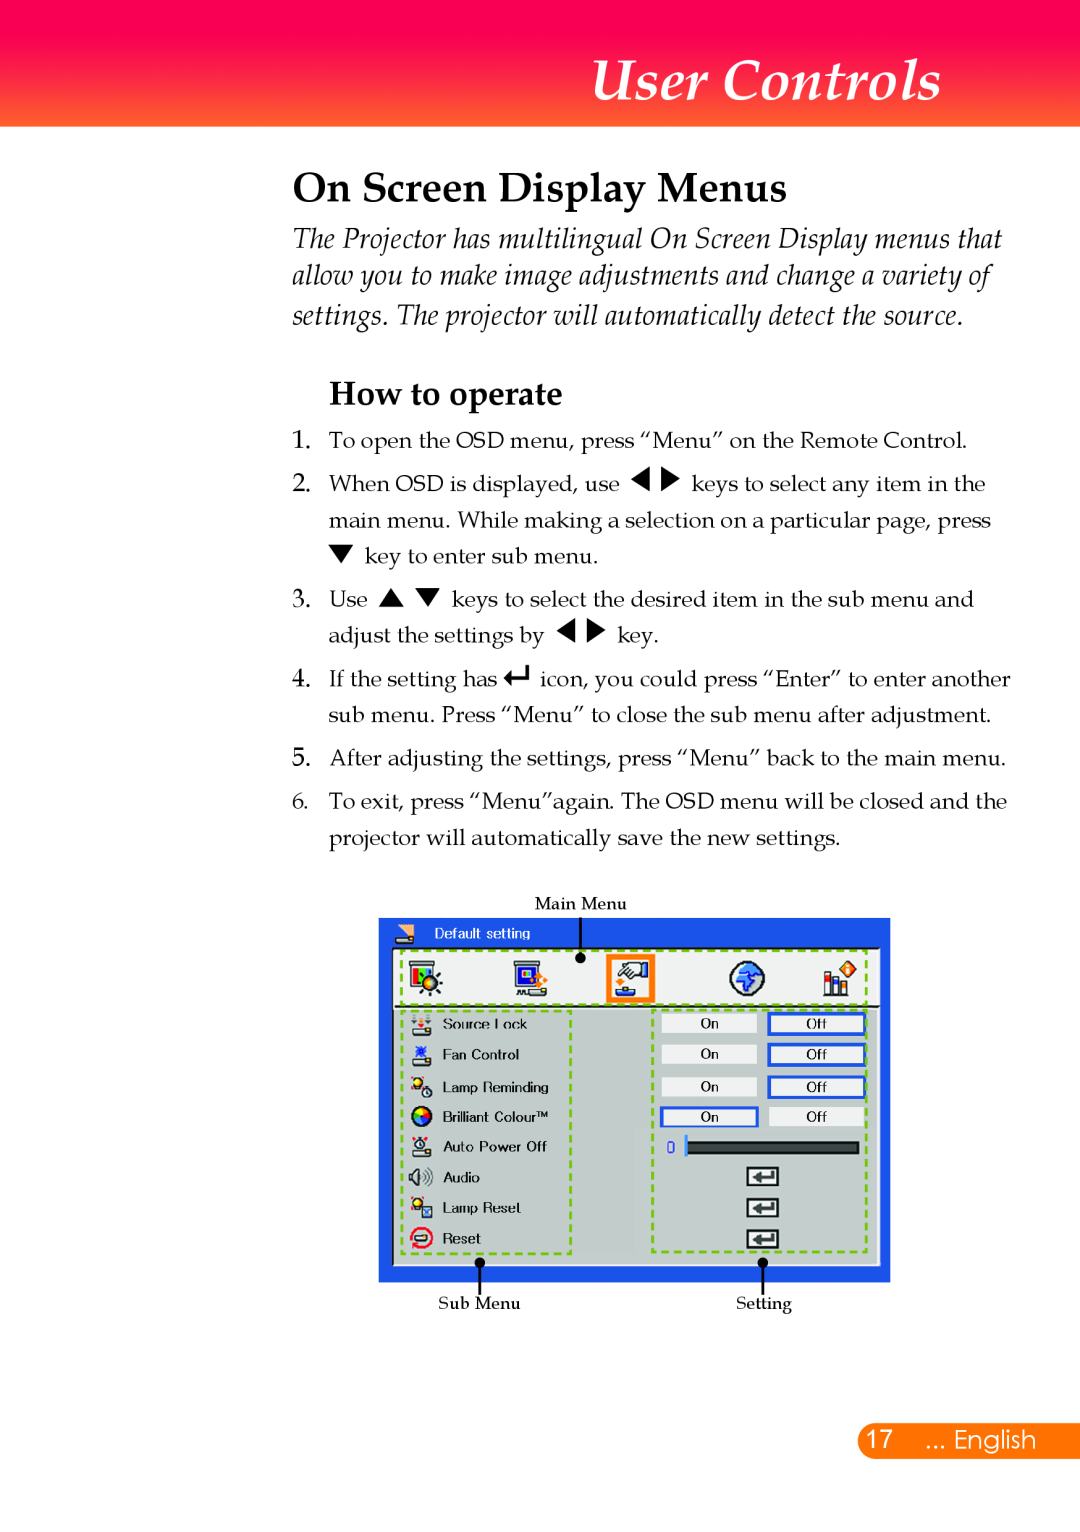 InFocus X6, X7 manual User Controls, On Screen Display Menus, How to operate, English 